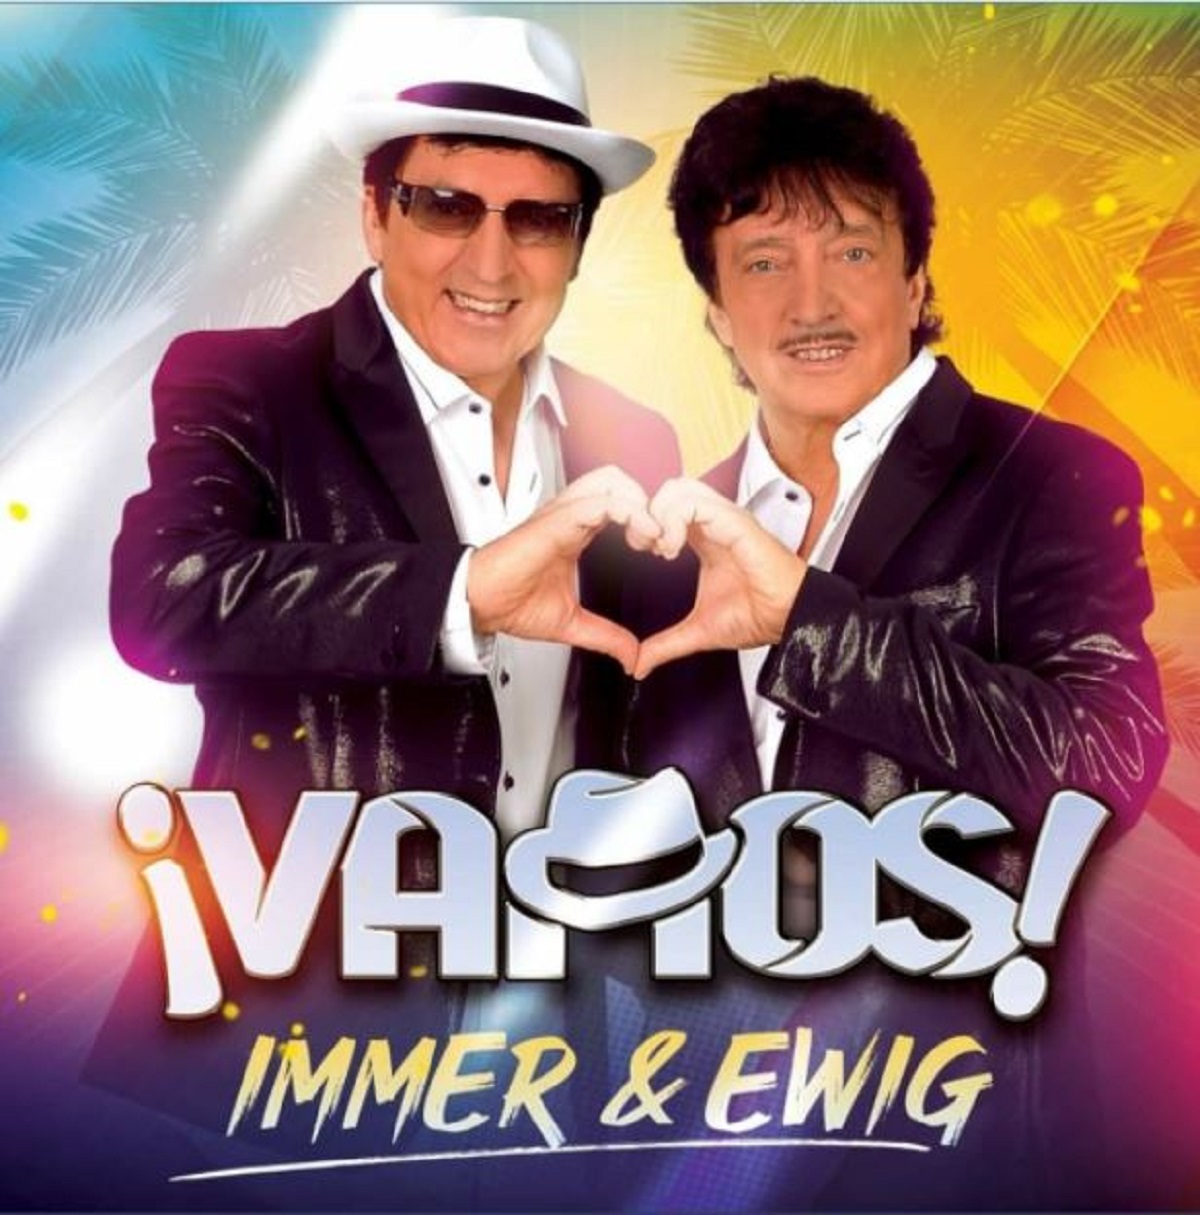 Vamos - Immer und Ewig - Cover.jpg